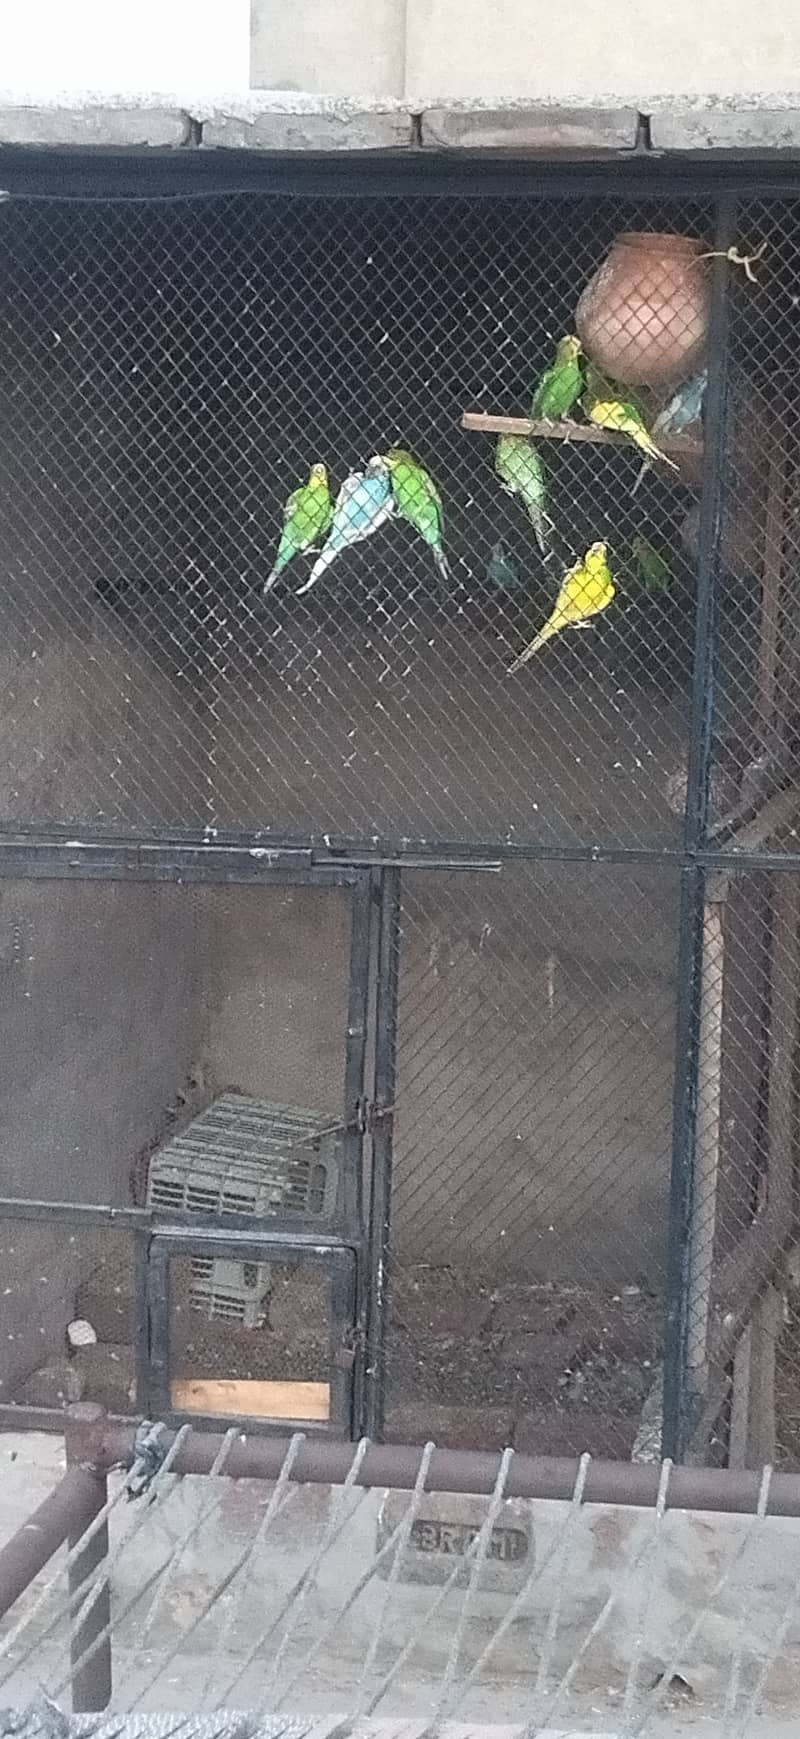 Australia parrot 1